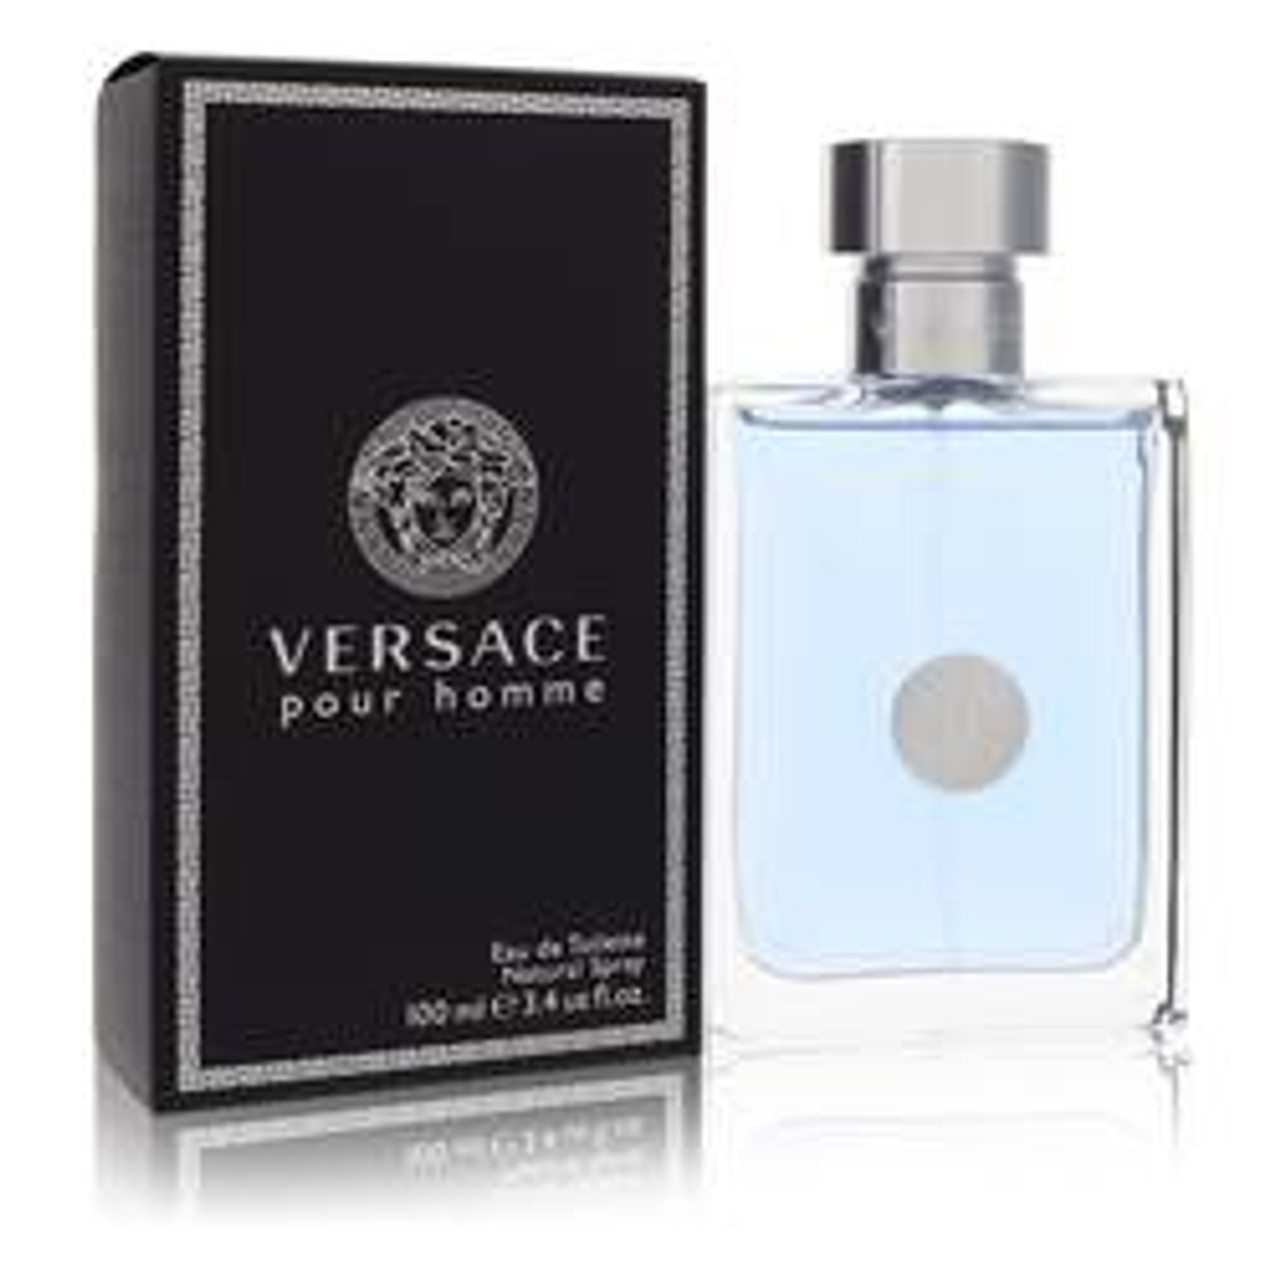 Versace Pour Homme Cologne By Versace Eau De Toilette Spray 3.4 oz for Men - [From 152.00 - Choose pk Qty ] - *Ships from Miami